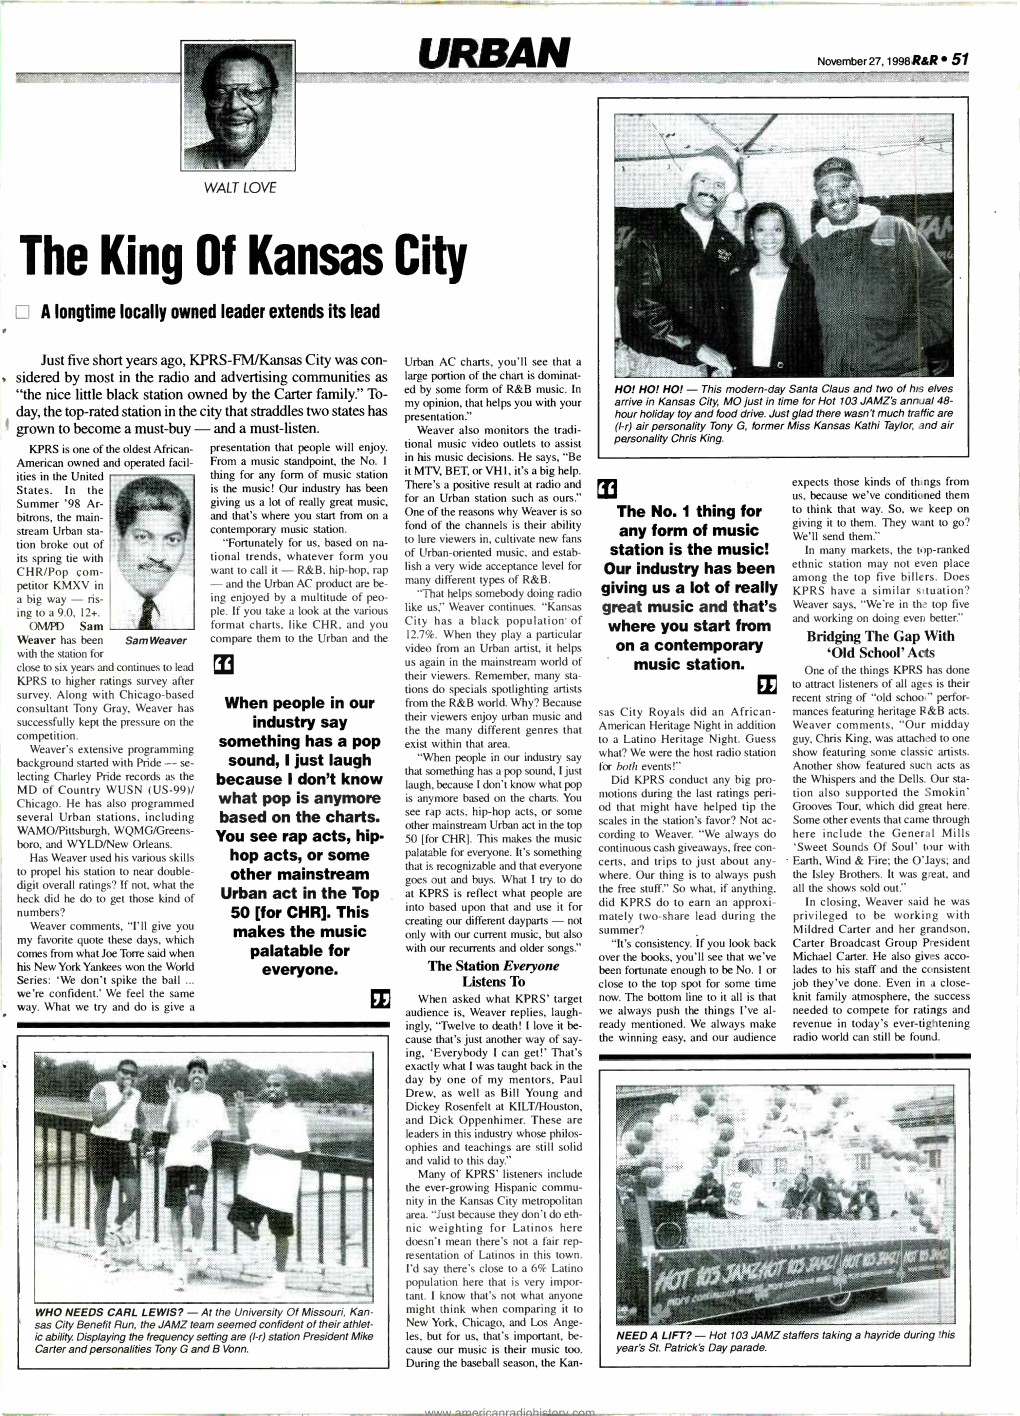 The King of Kansas City